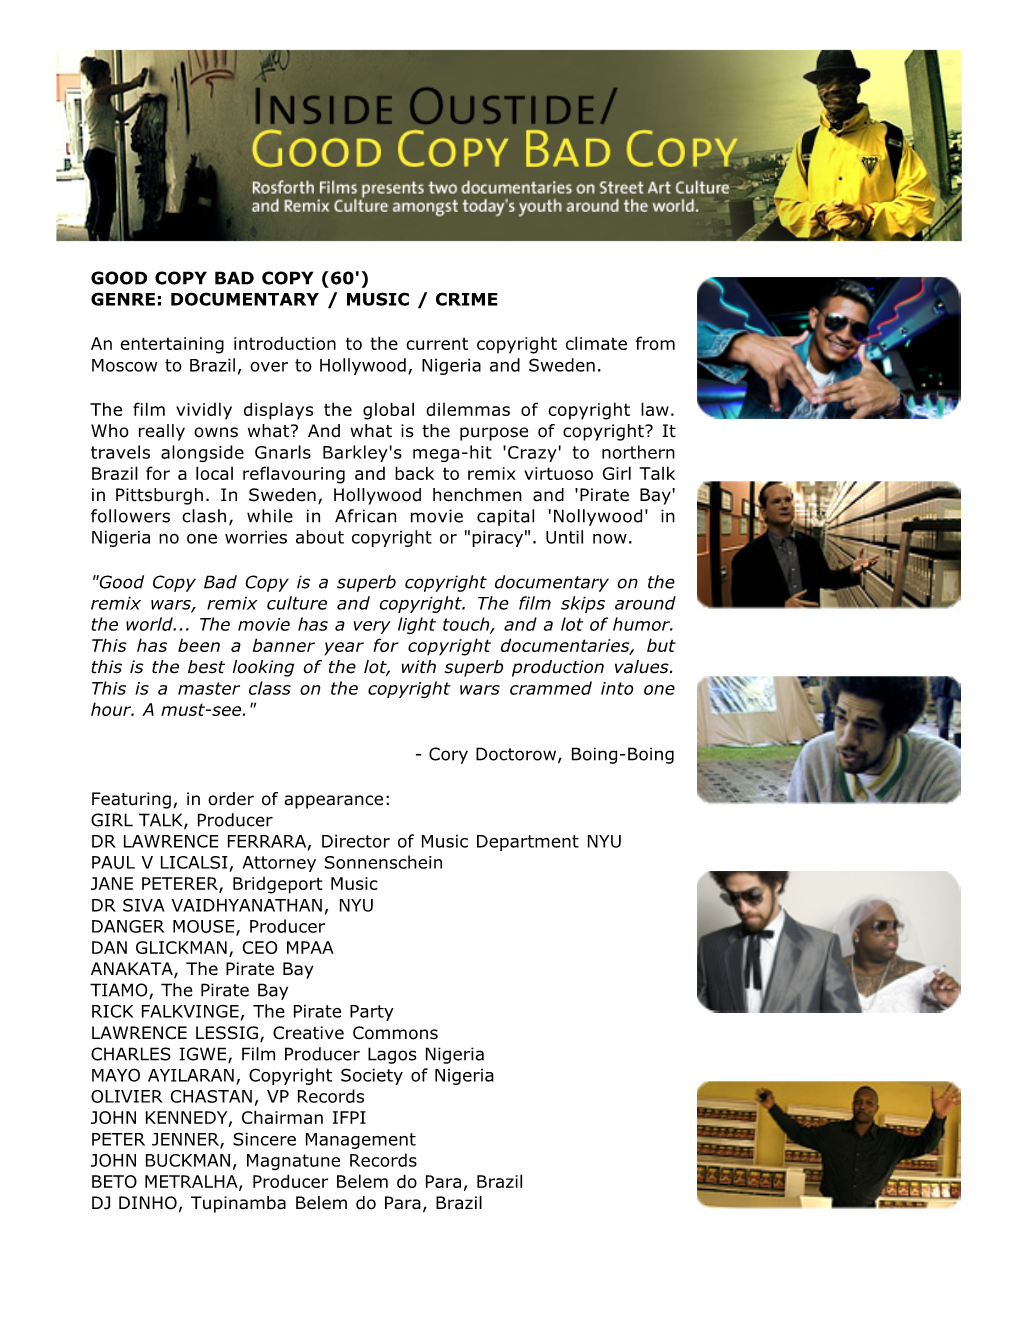 Good Copy Bad Copy (60') Genre: Documentary / Music / Crime